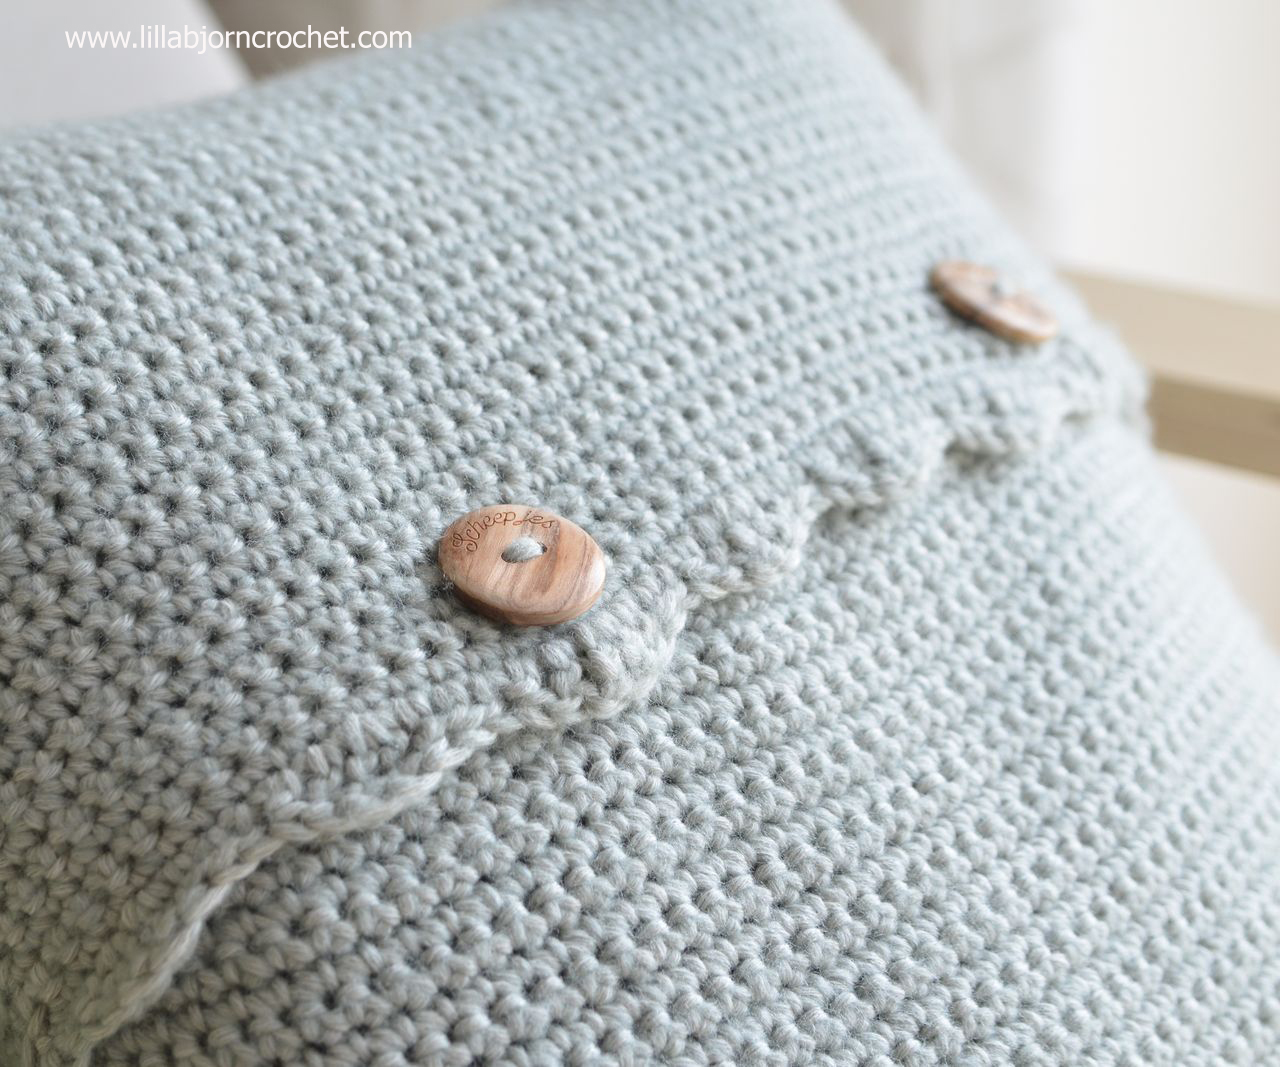 Tree of Life pillow - overlay crochet pattern by Lilla Bjorn